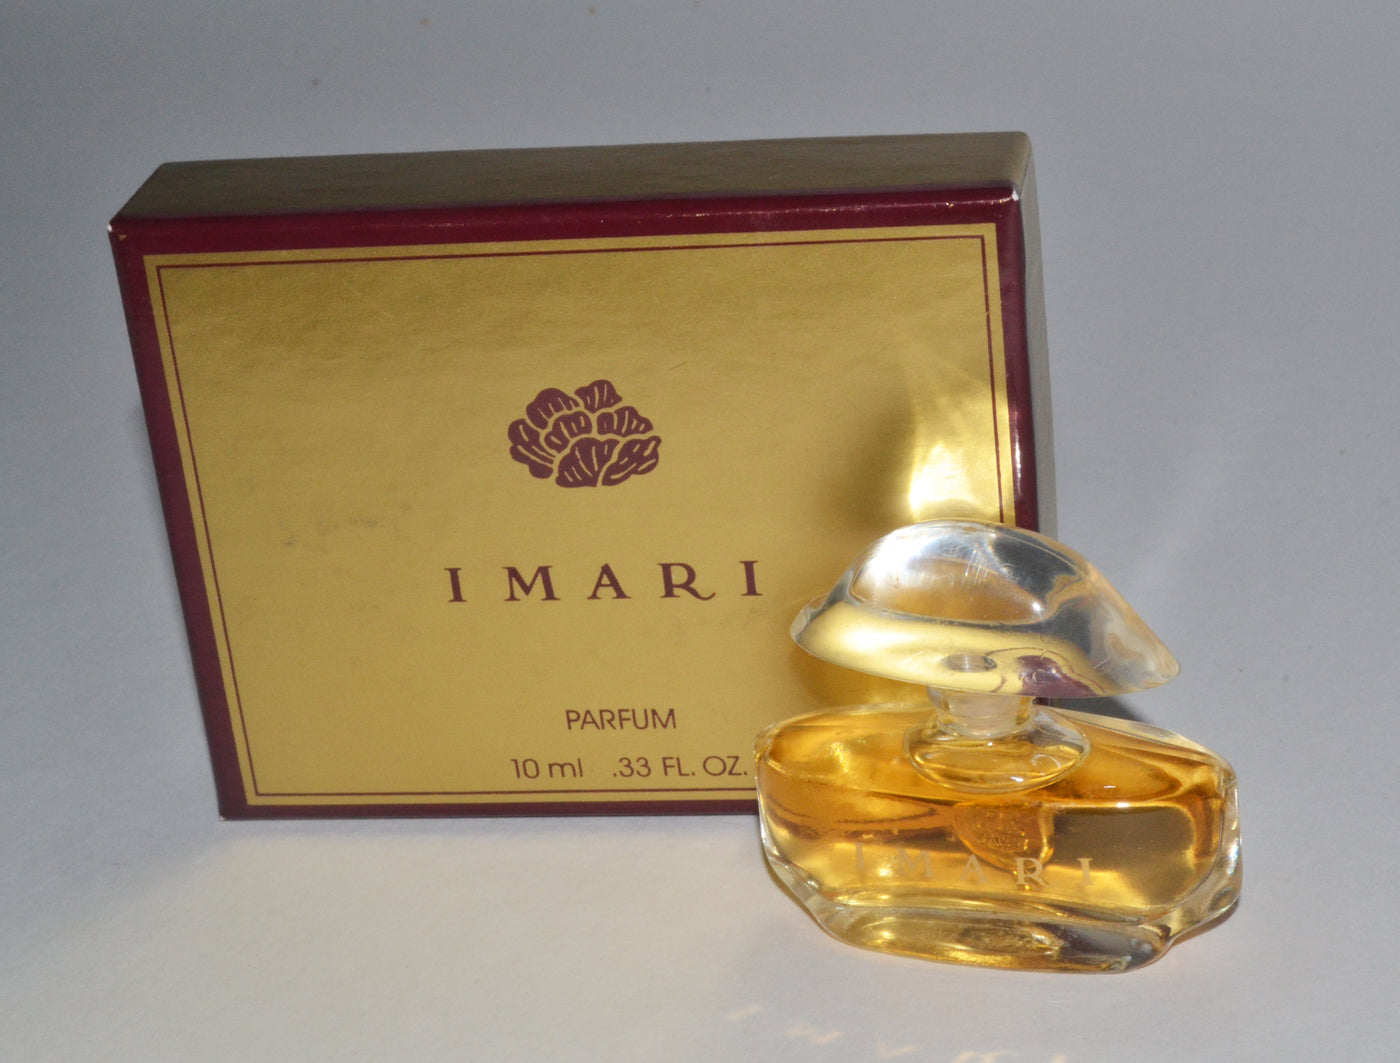 Vintage Imari Parfum By Avon